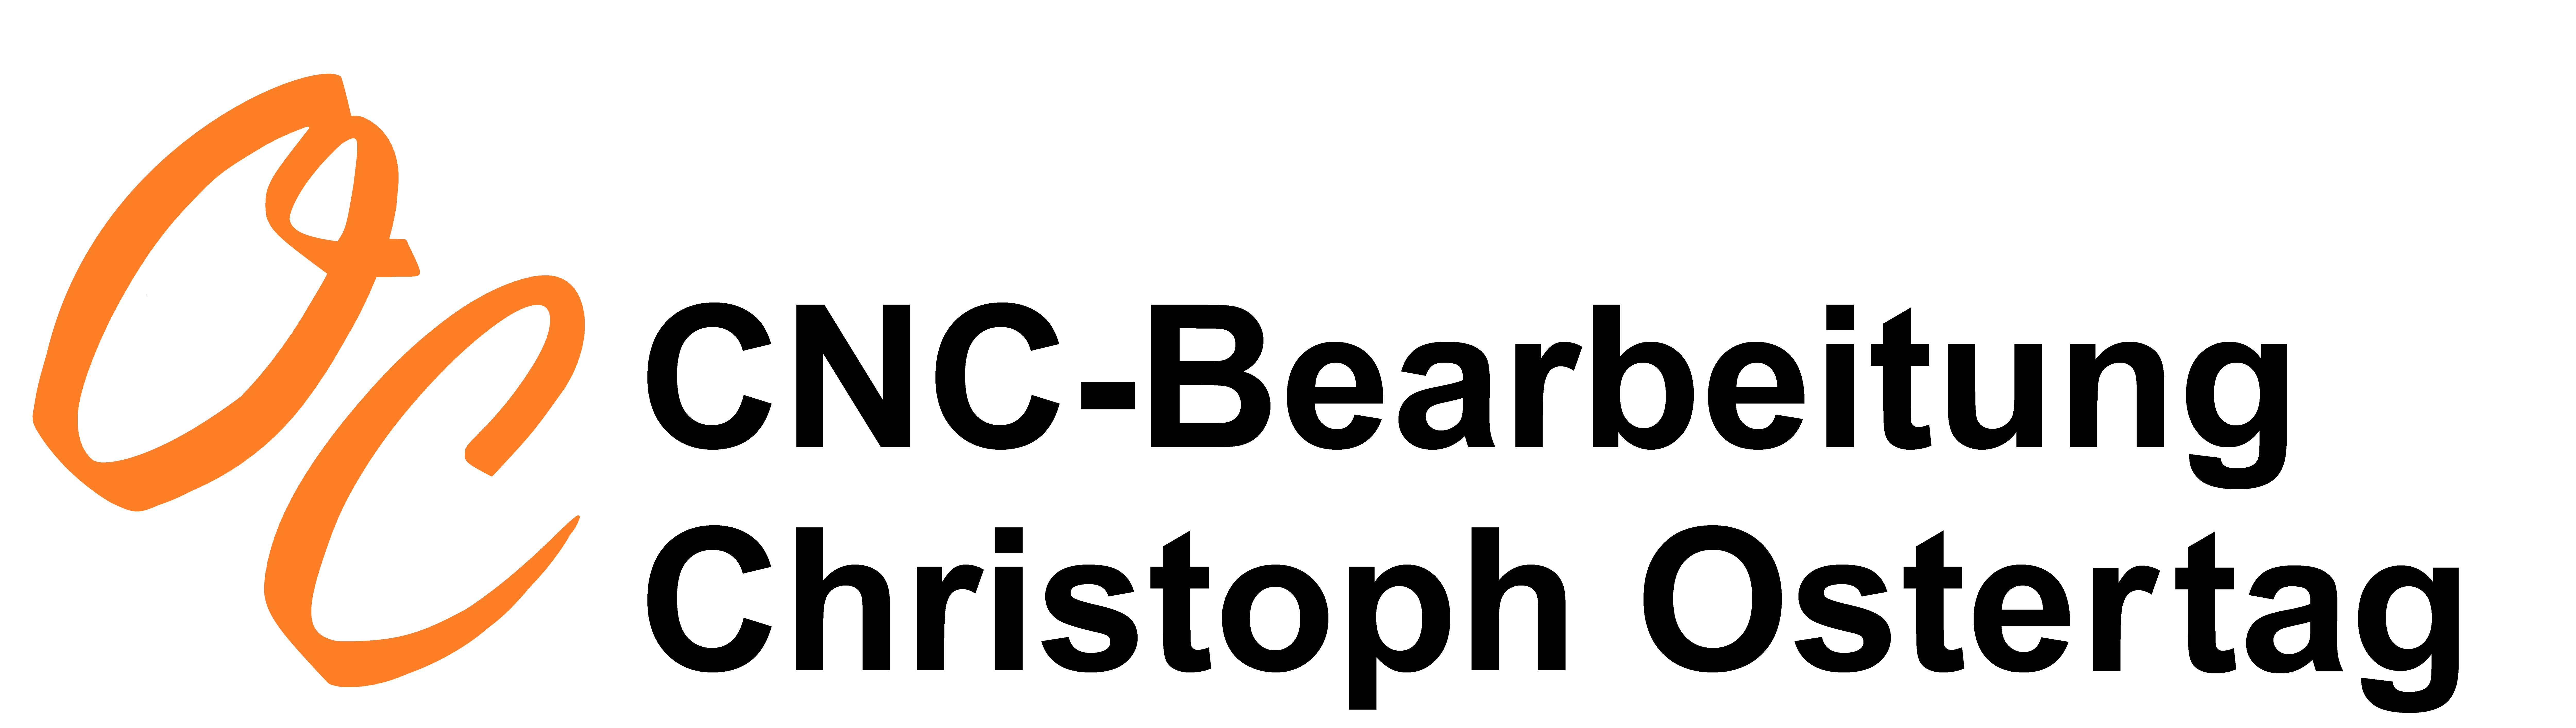 CNC Bearbeitung Christoph Ostertag Logo